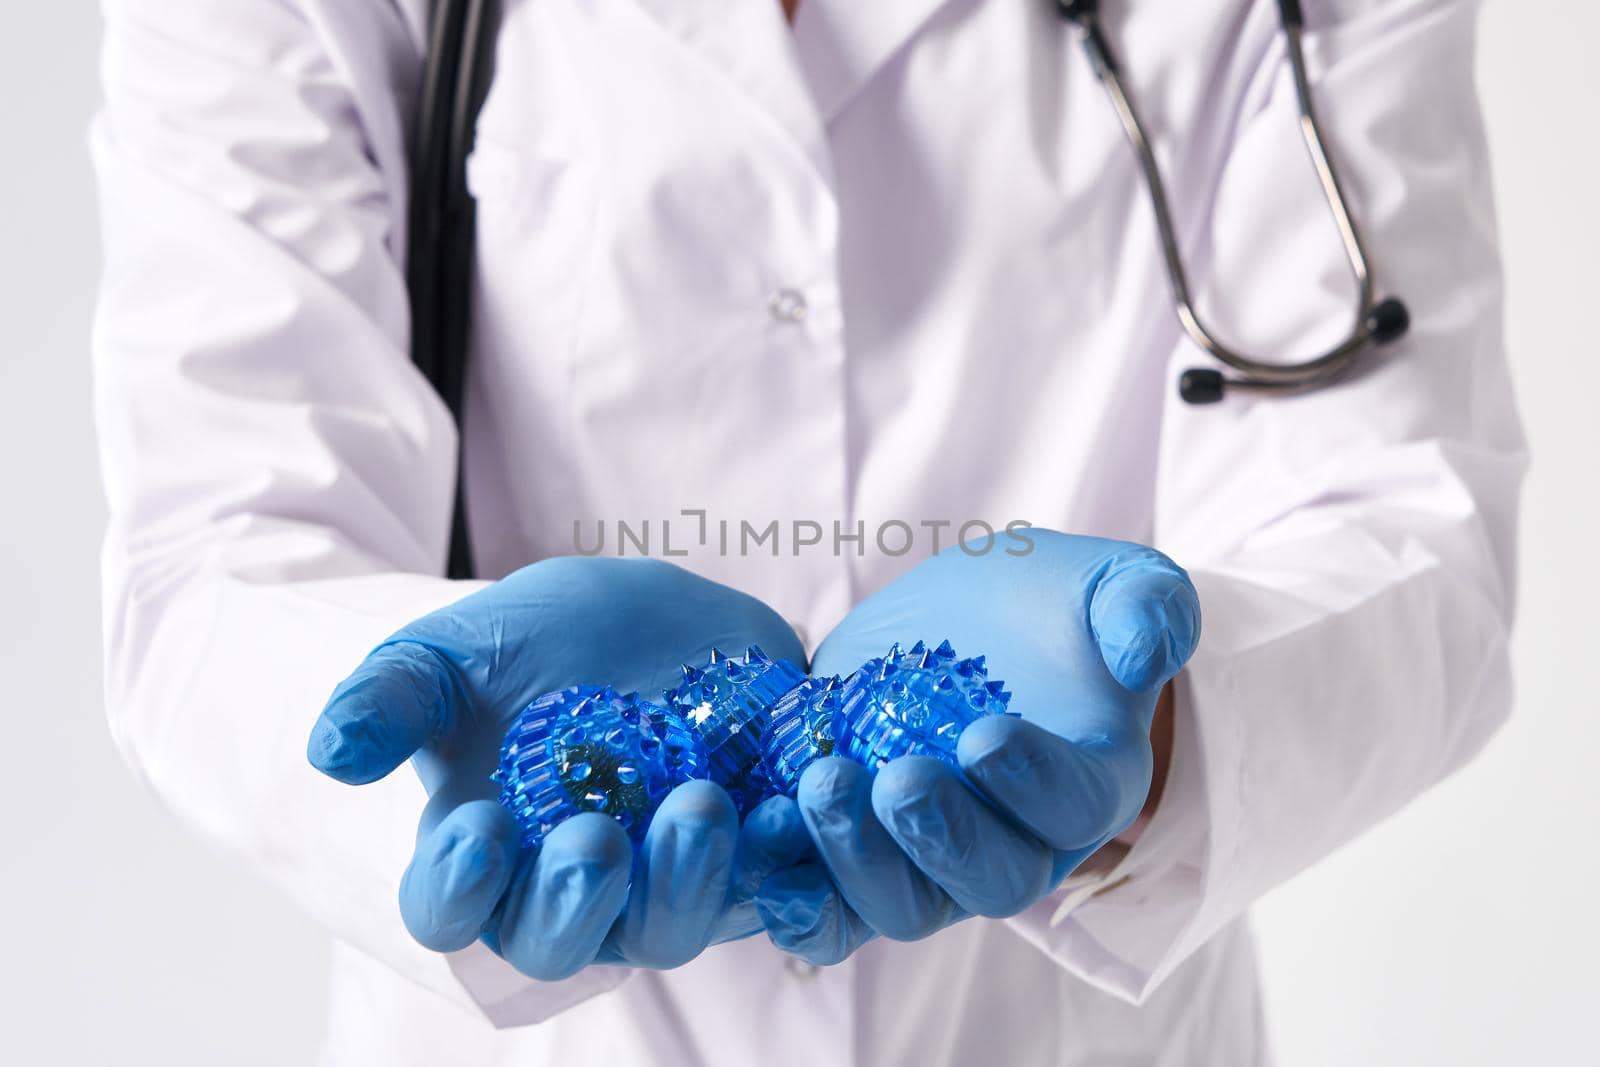 Doctor holding in hands wearing medical gloves three-dimensional model of virus - coronavirus COVID-19